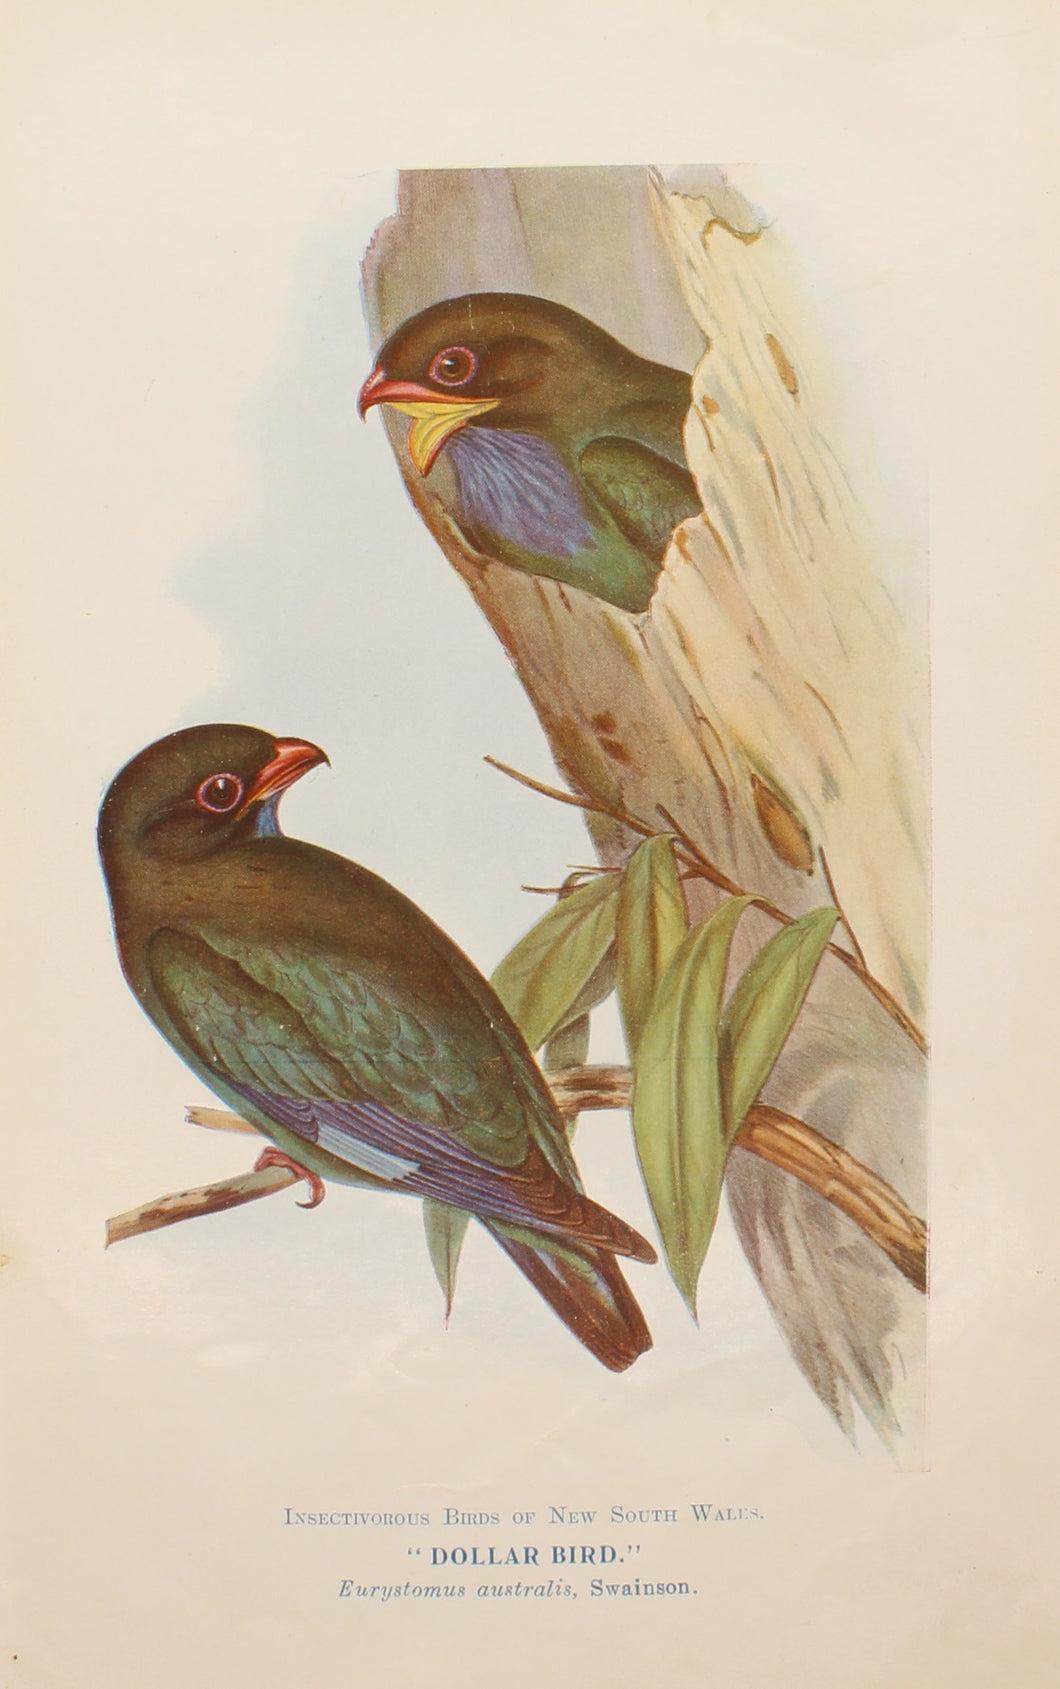 Bird, North Alfred John, Dollar Bird, Insectivorous Birds of NSW, 1896-7